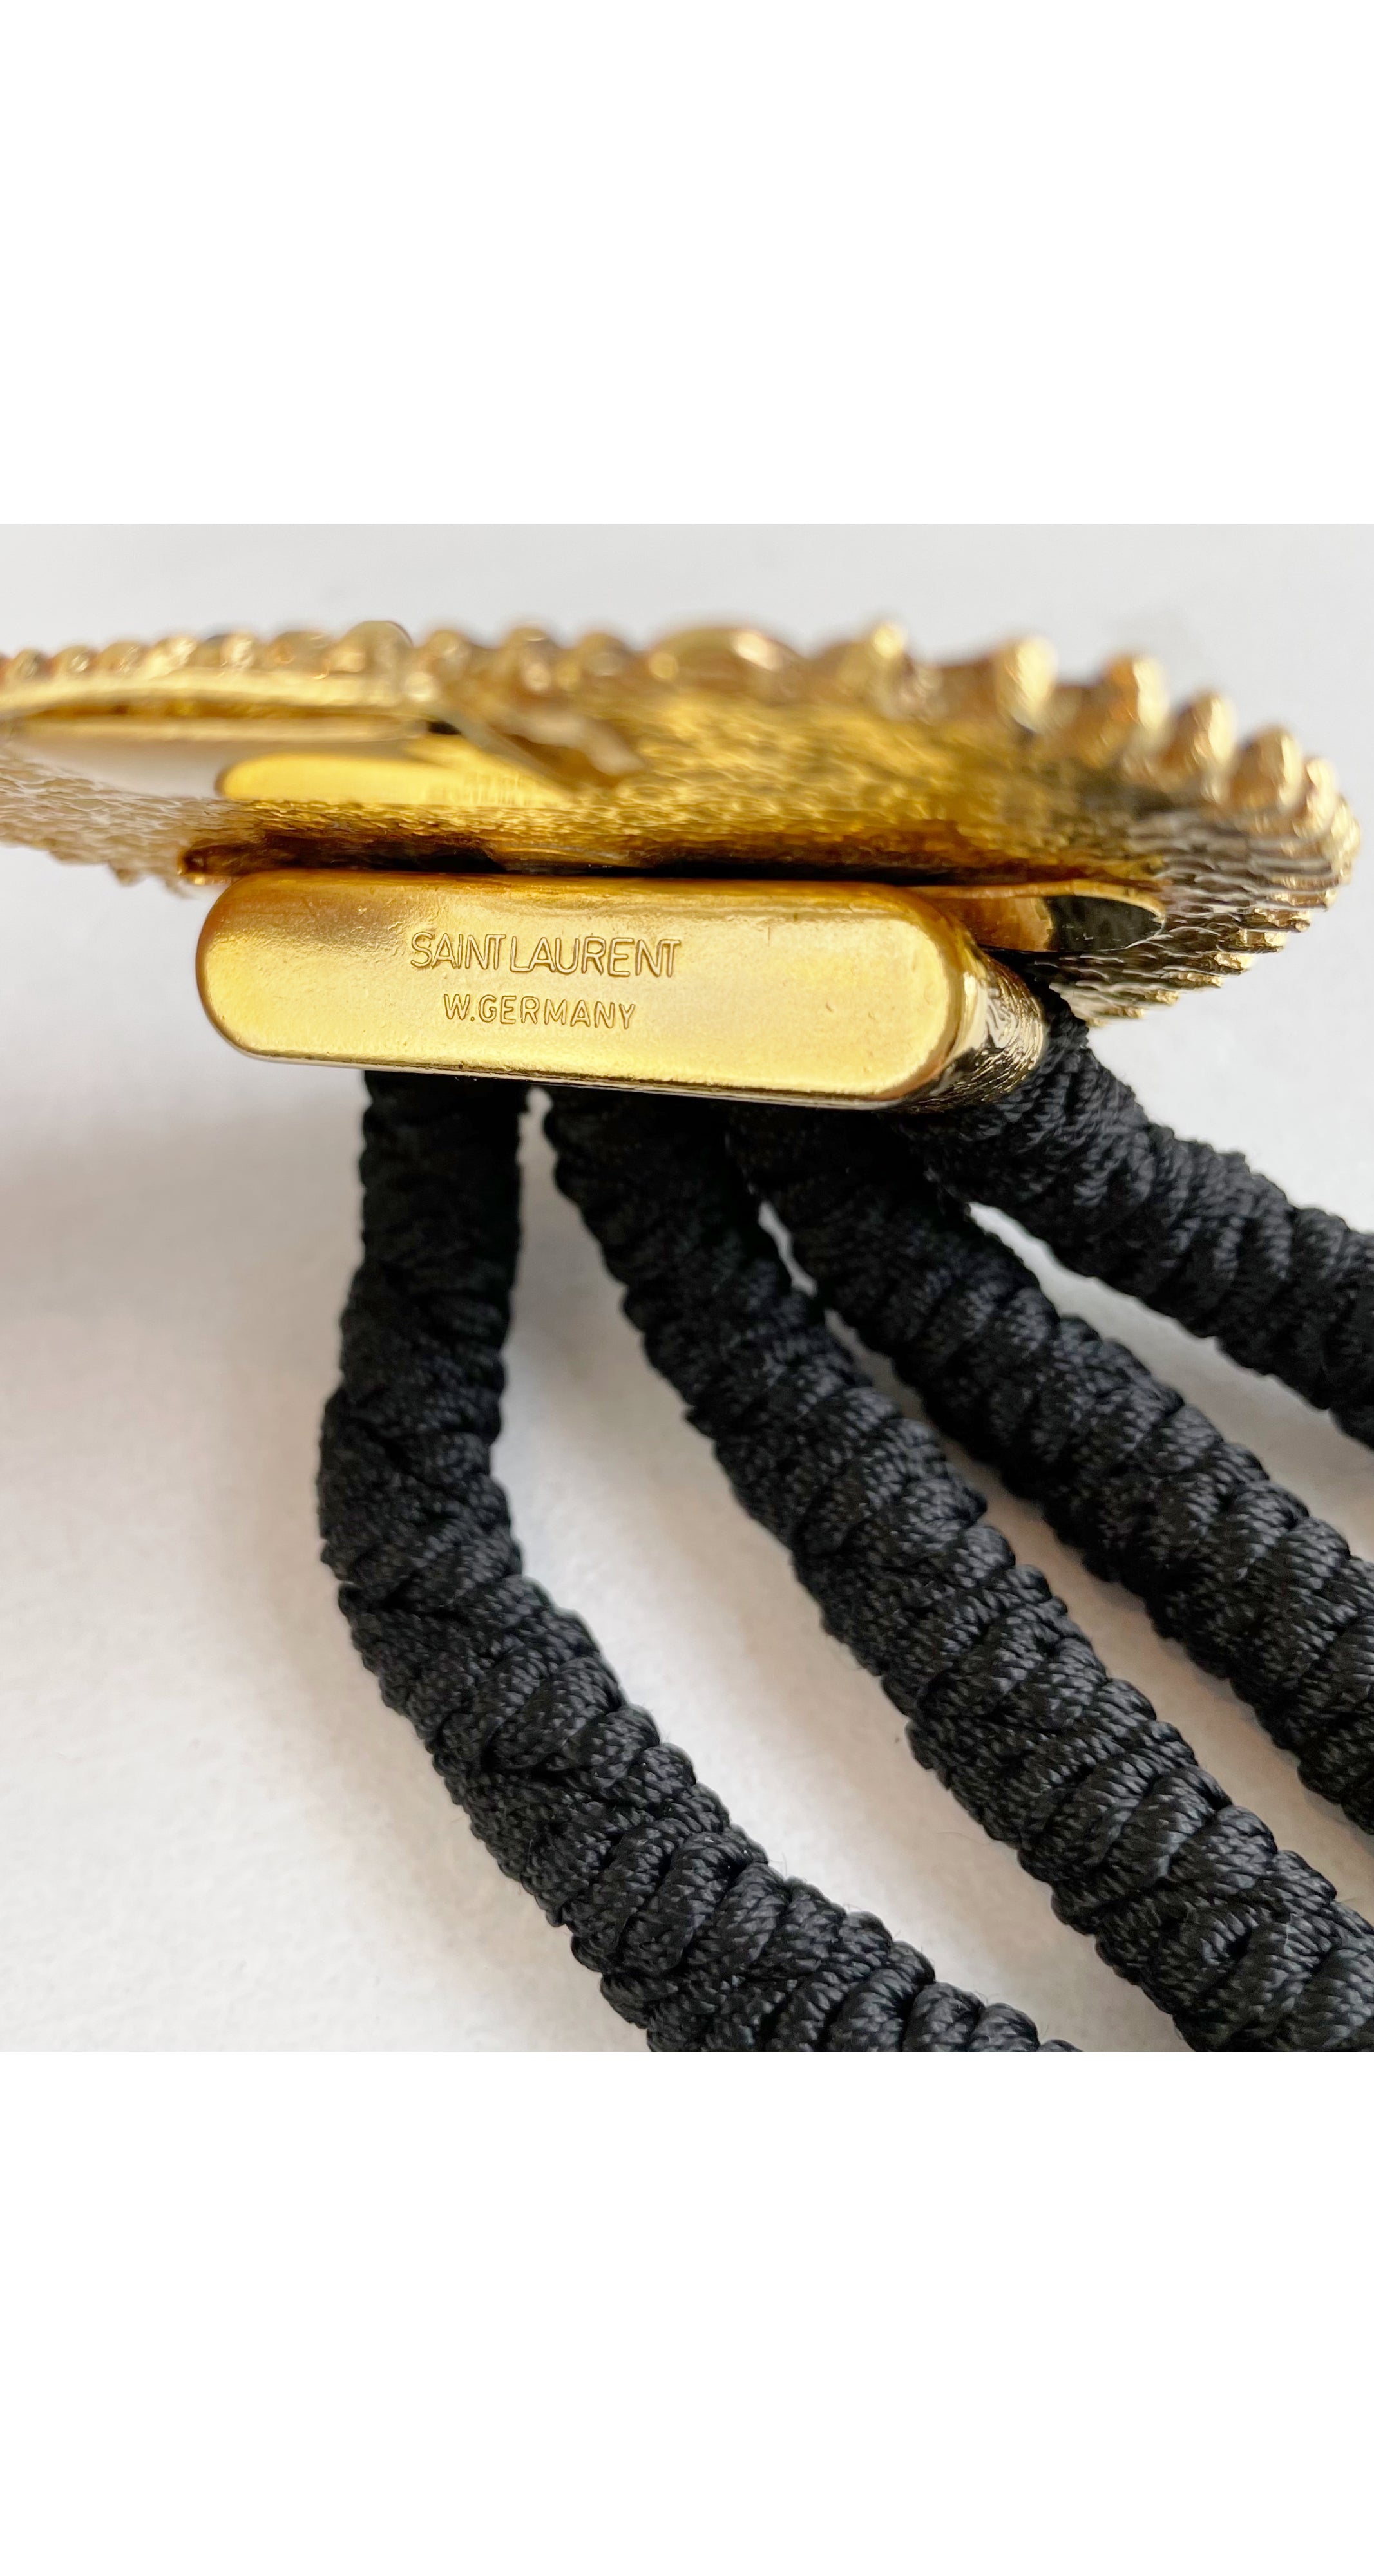 1981-82 F/W Runway Ornate Gold-Plated Buckle Cord Belt